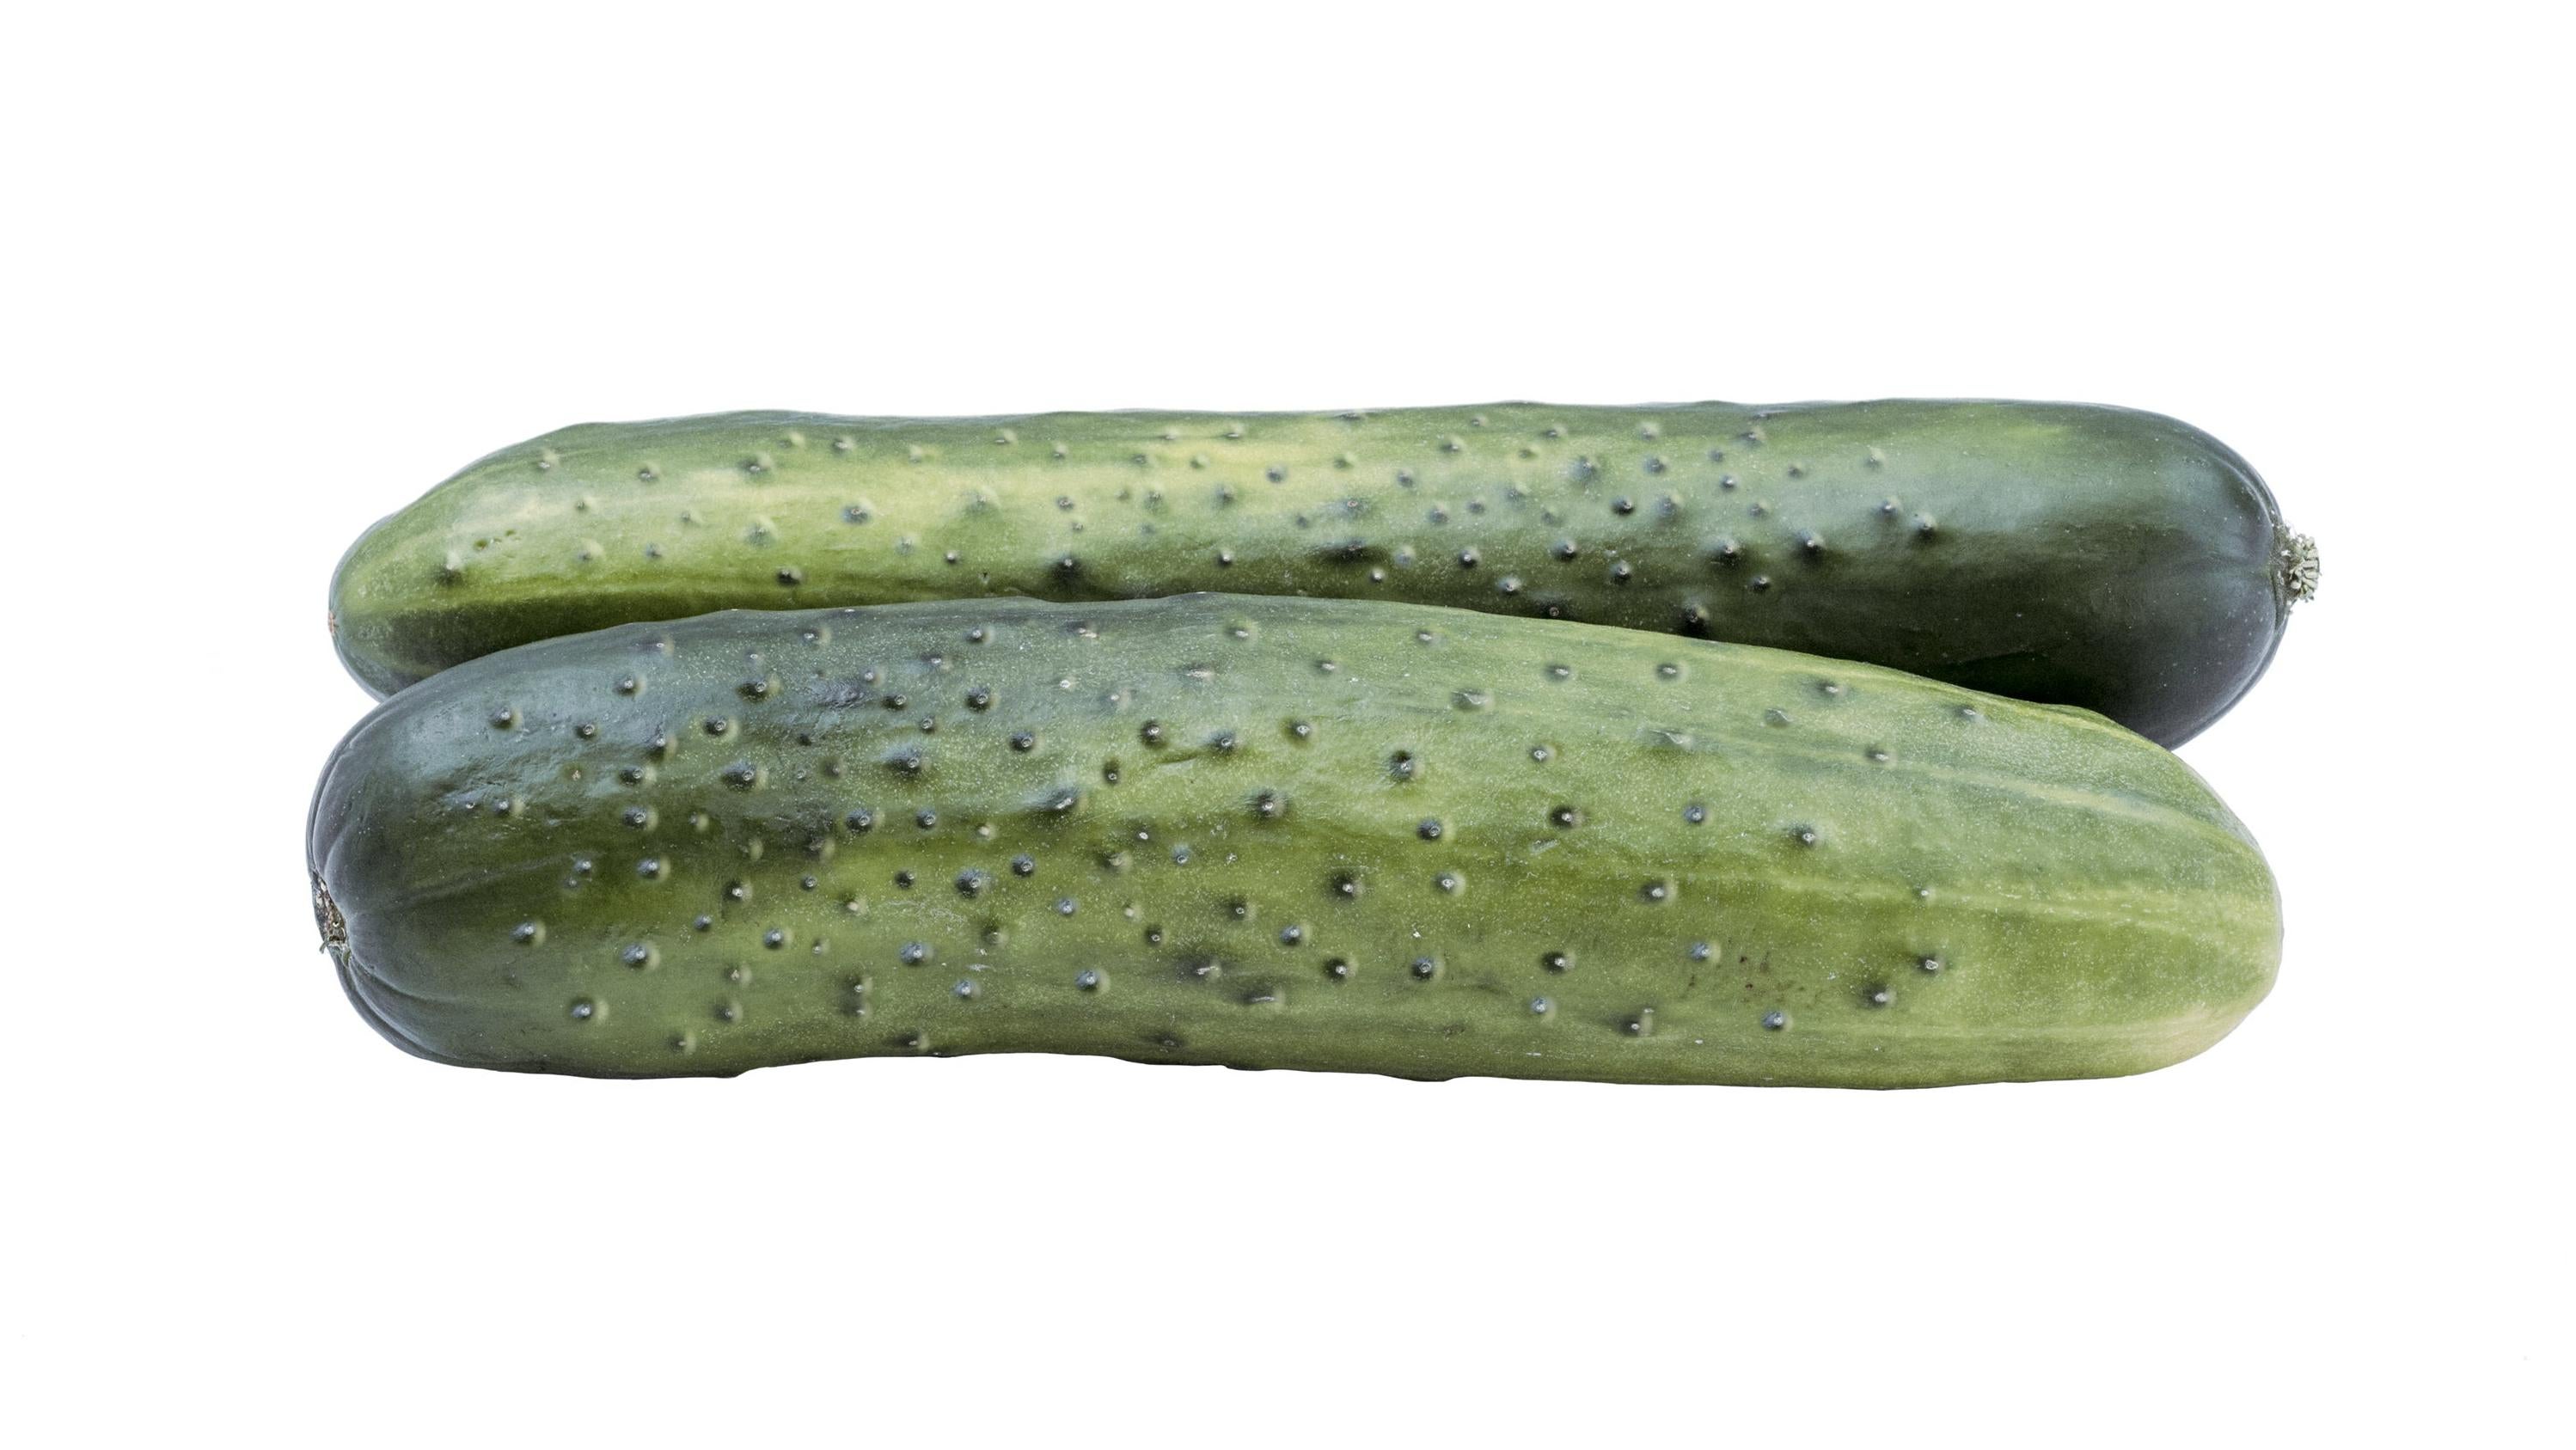 The Muromsky cucumber. (Image: Courtesy of Hendrick’s Gin)